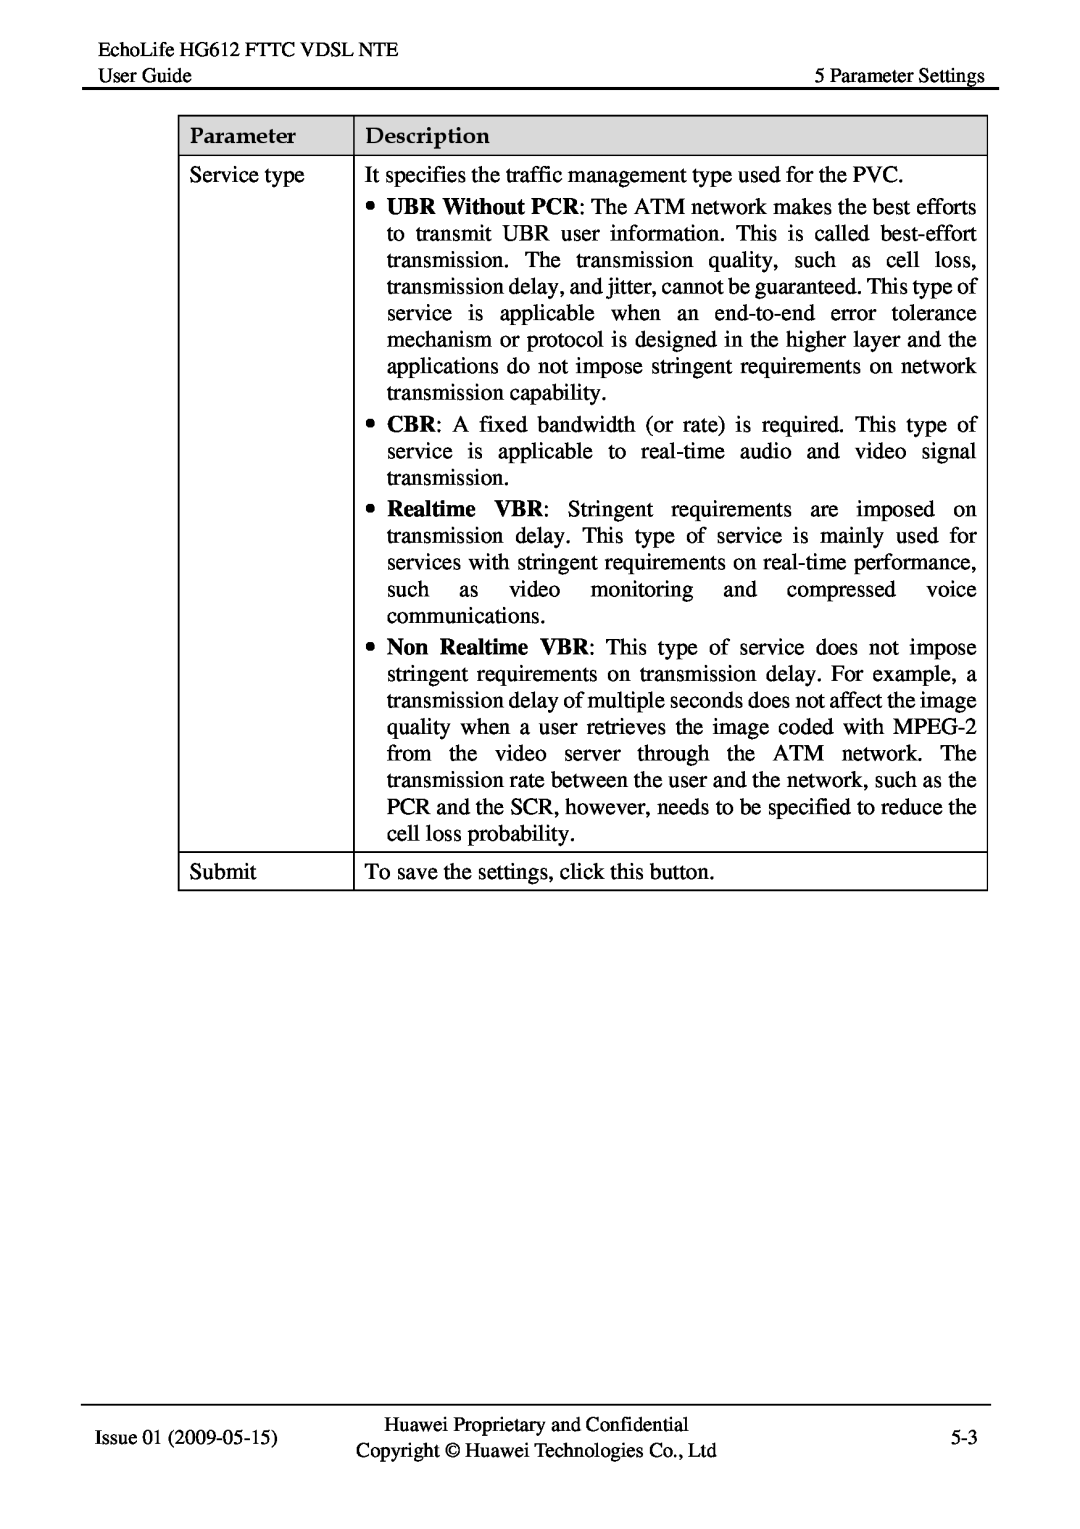 Huawei HG612FTTC VDSL NTE manual Parameter, Description 